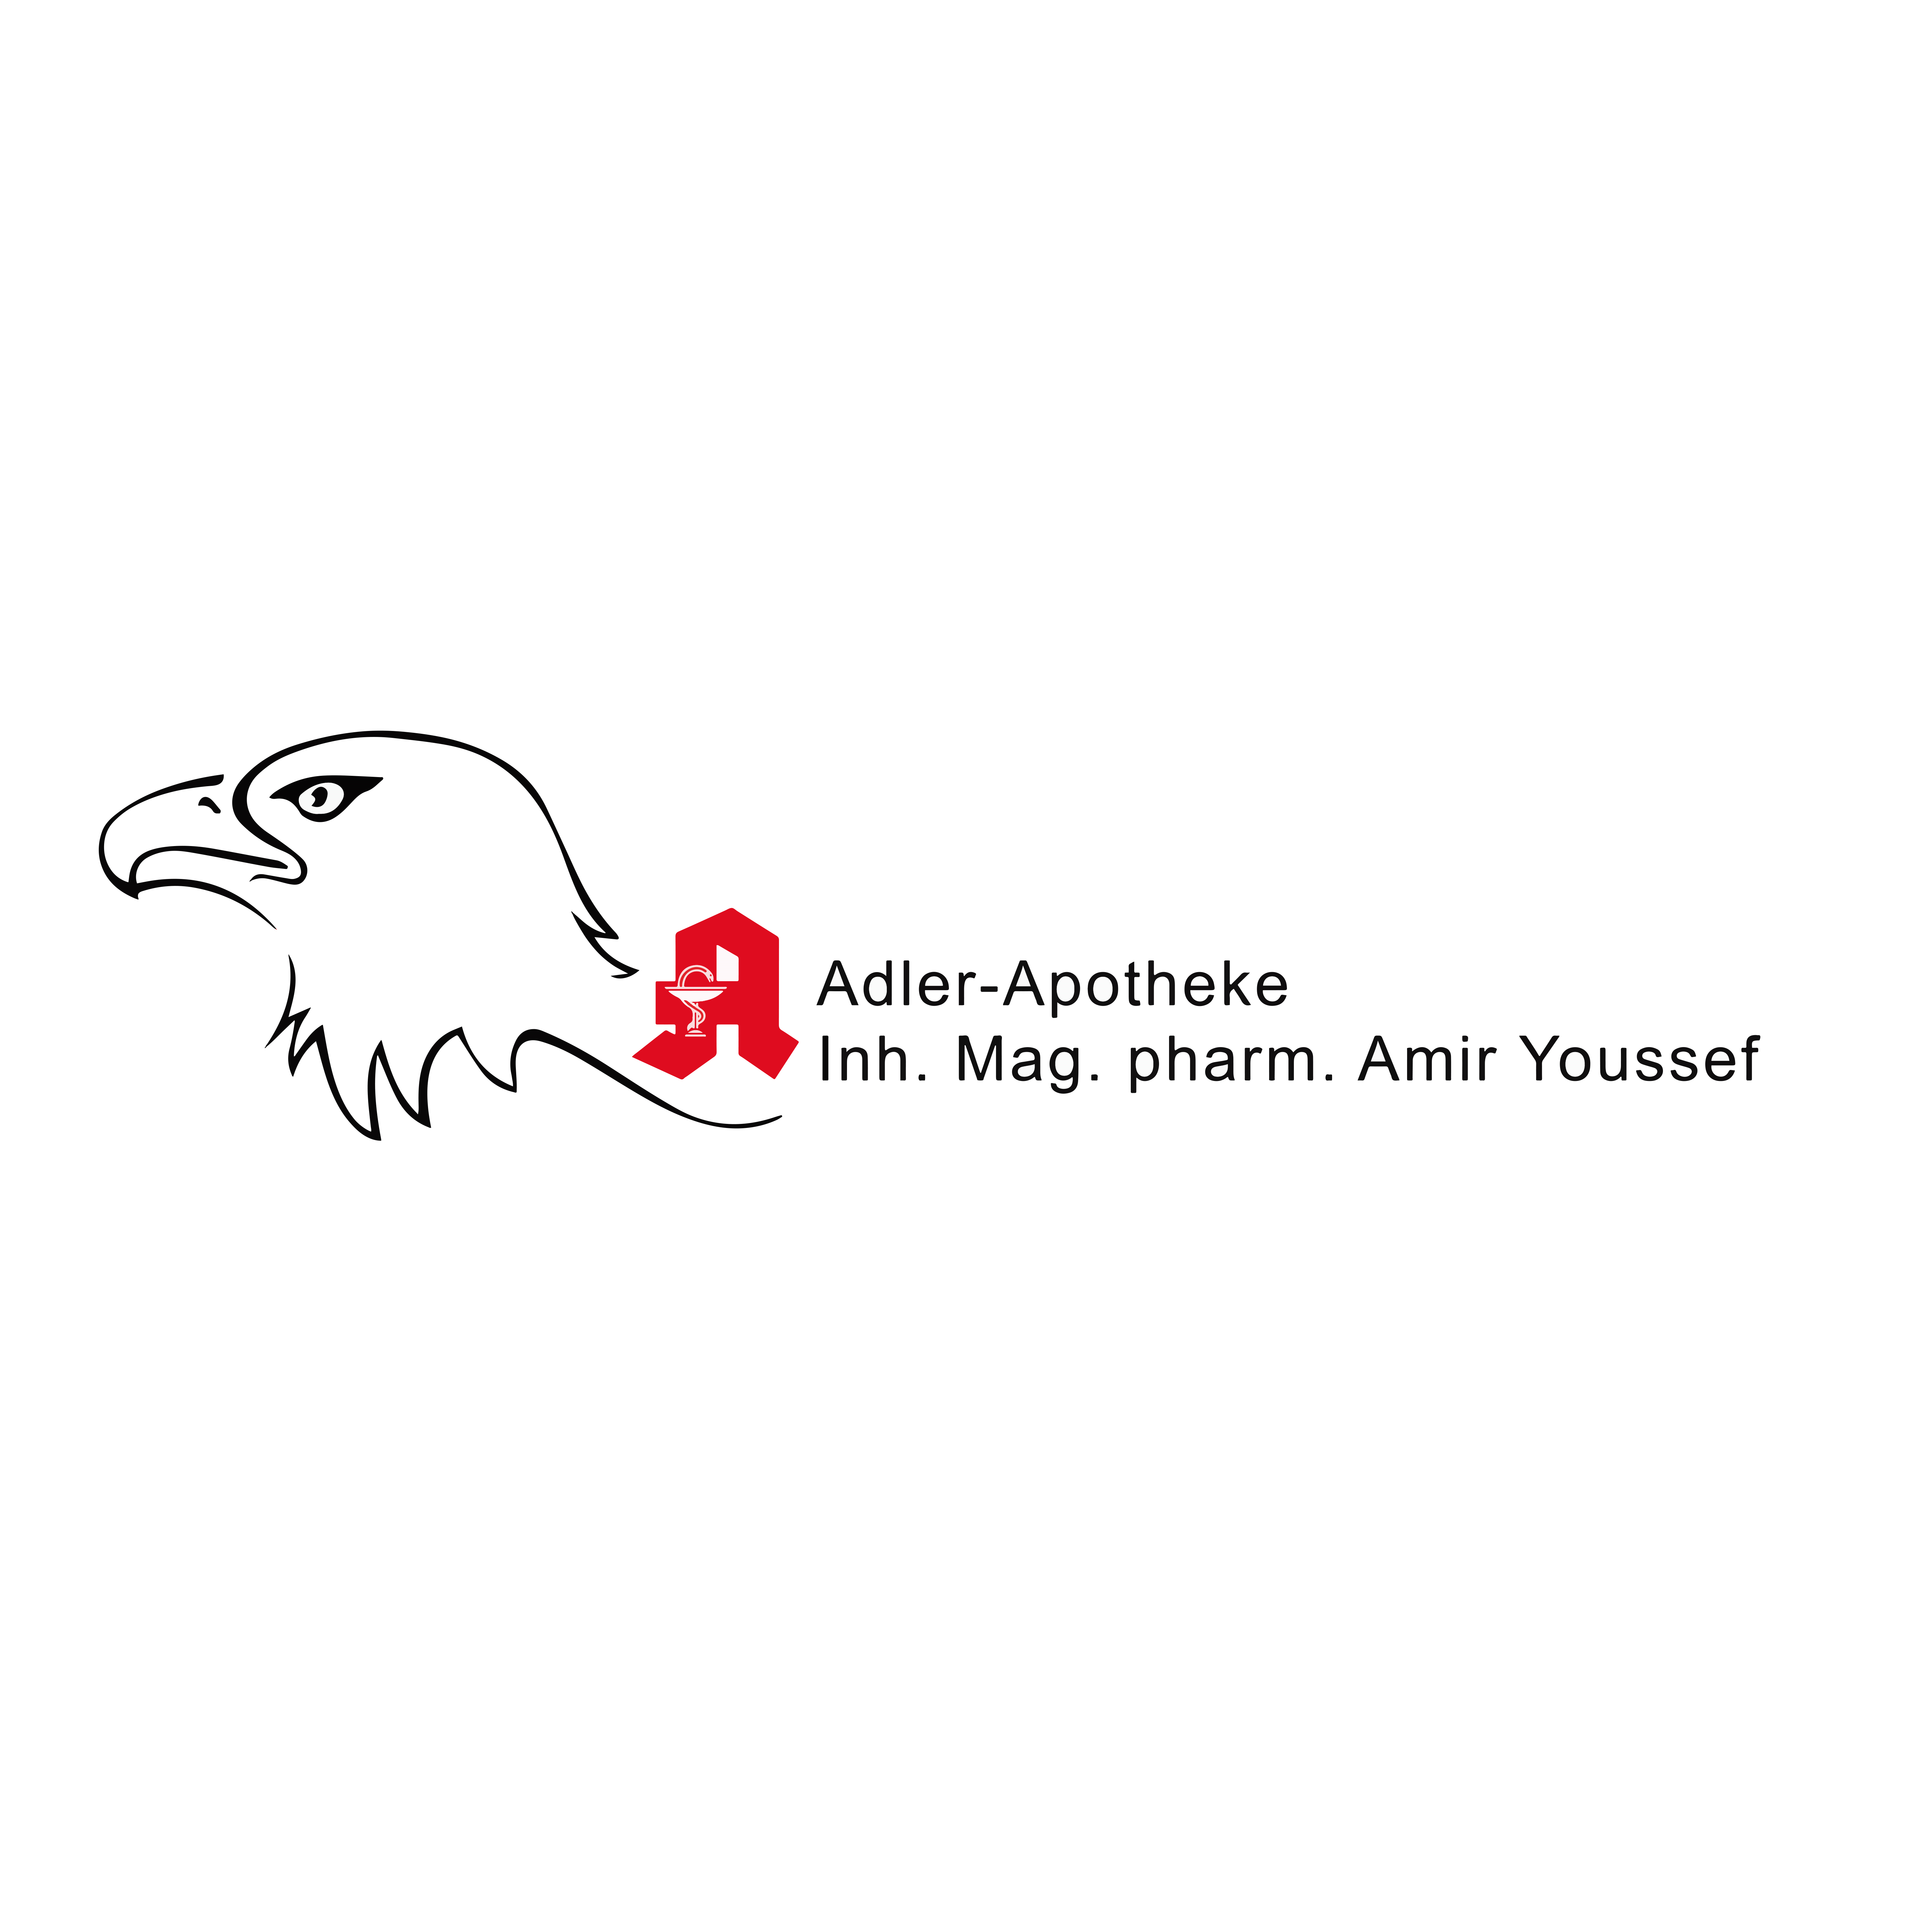 Adler-Apotheke in Alzey - Logo